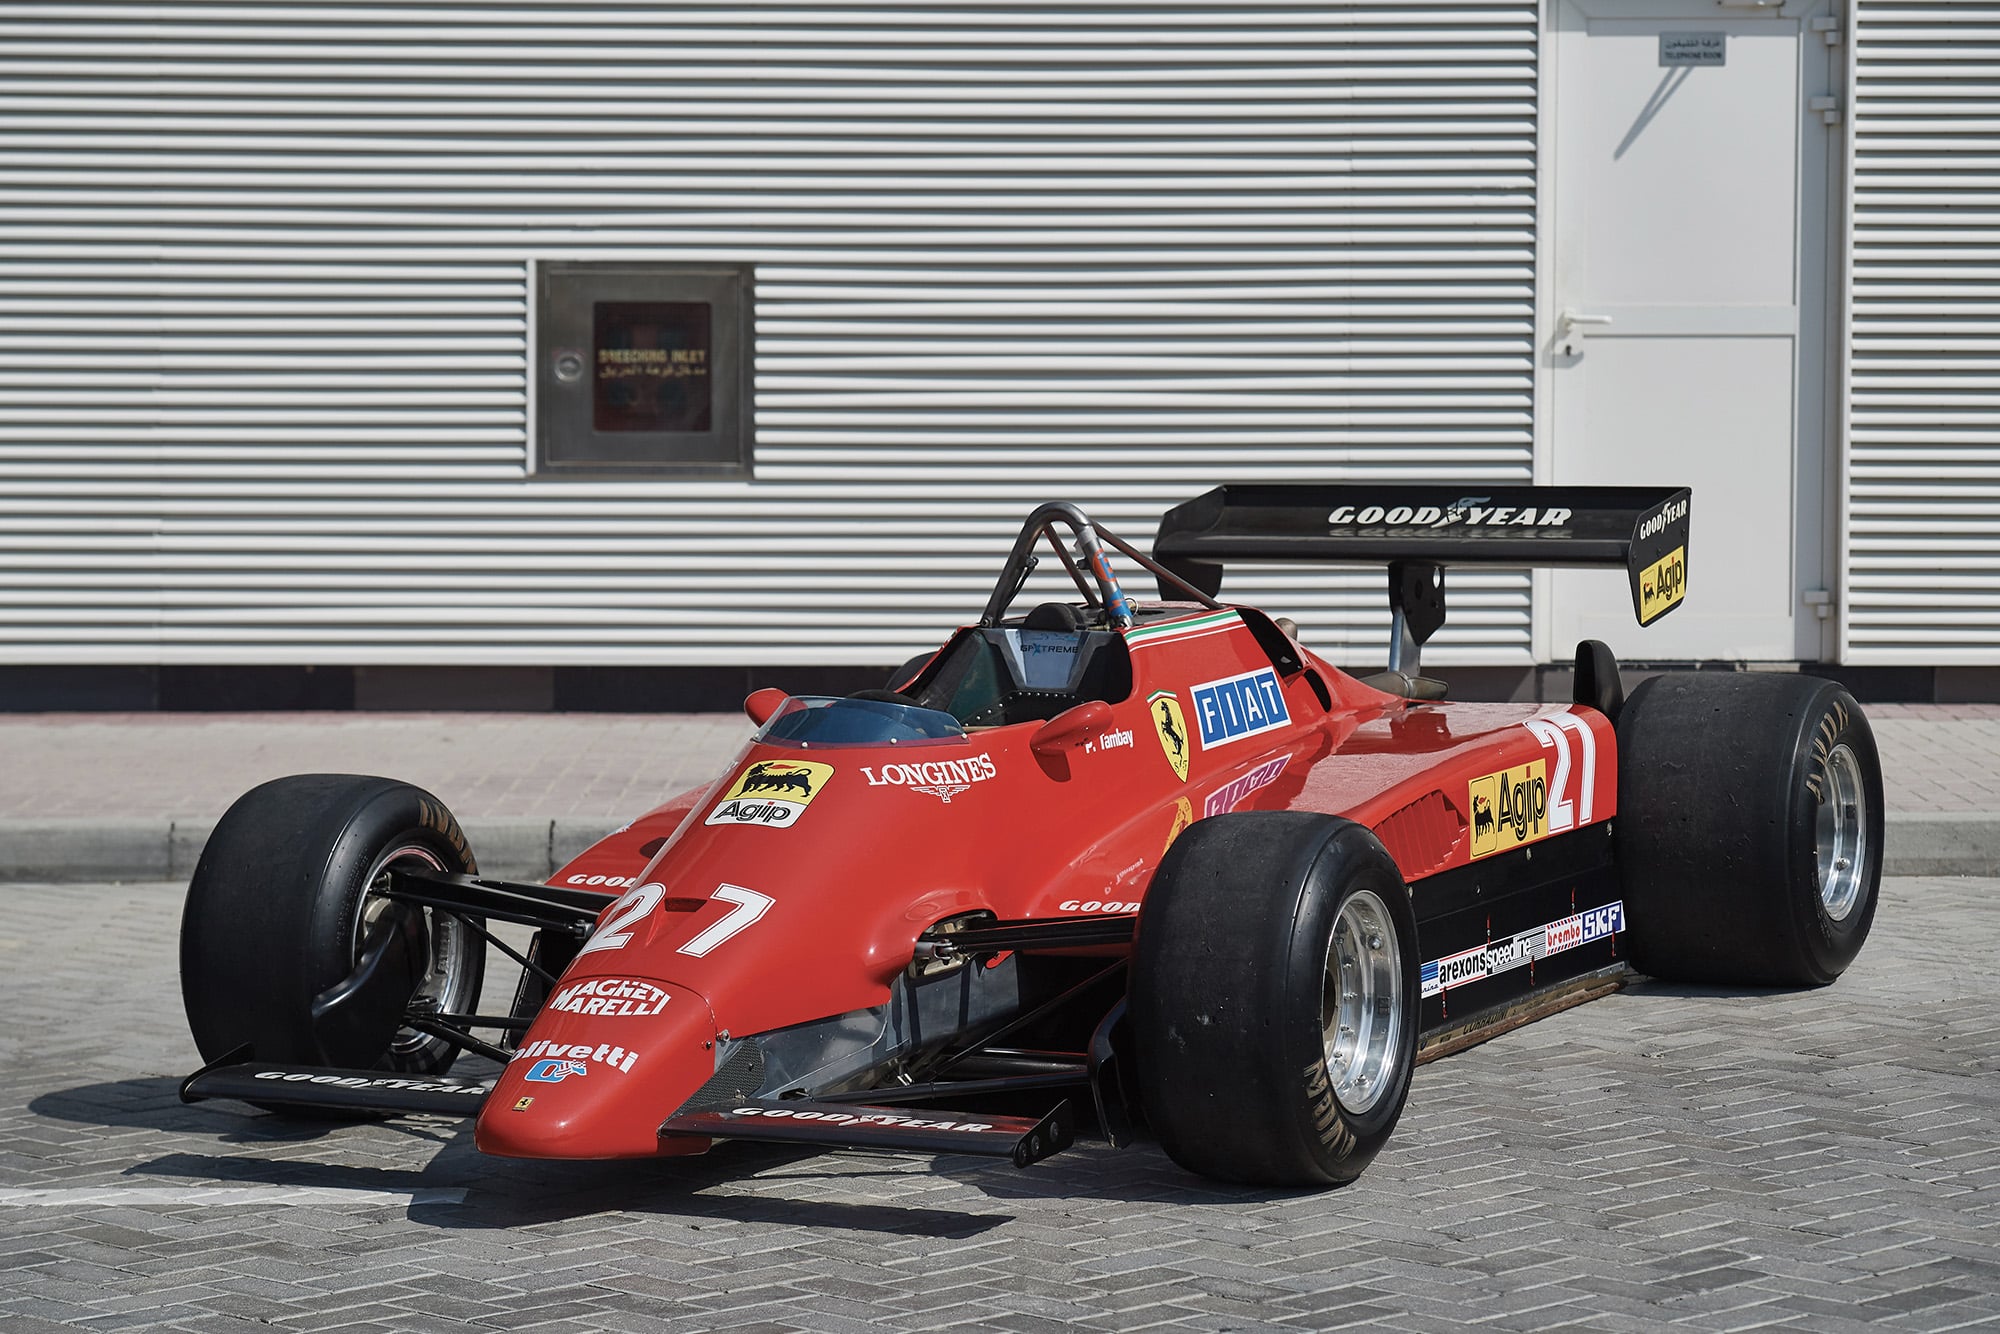 Front view of the 1982 German Grand Prix-winning Ferrari 126 C2